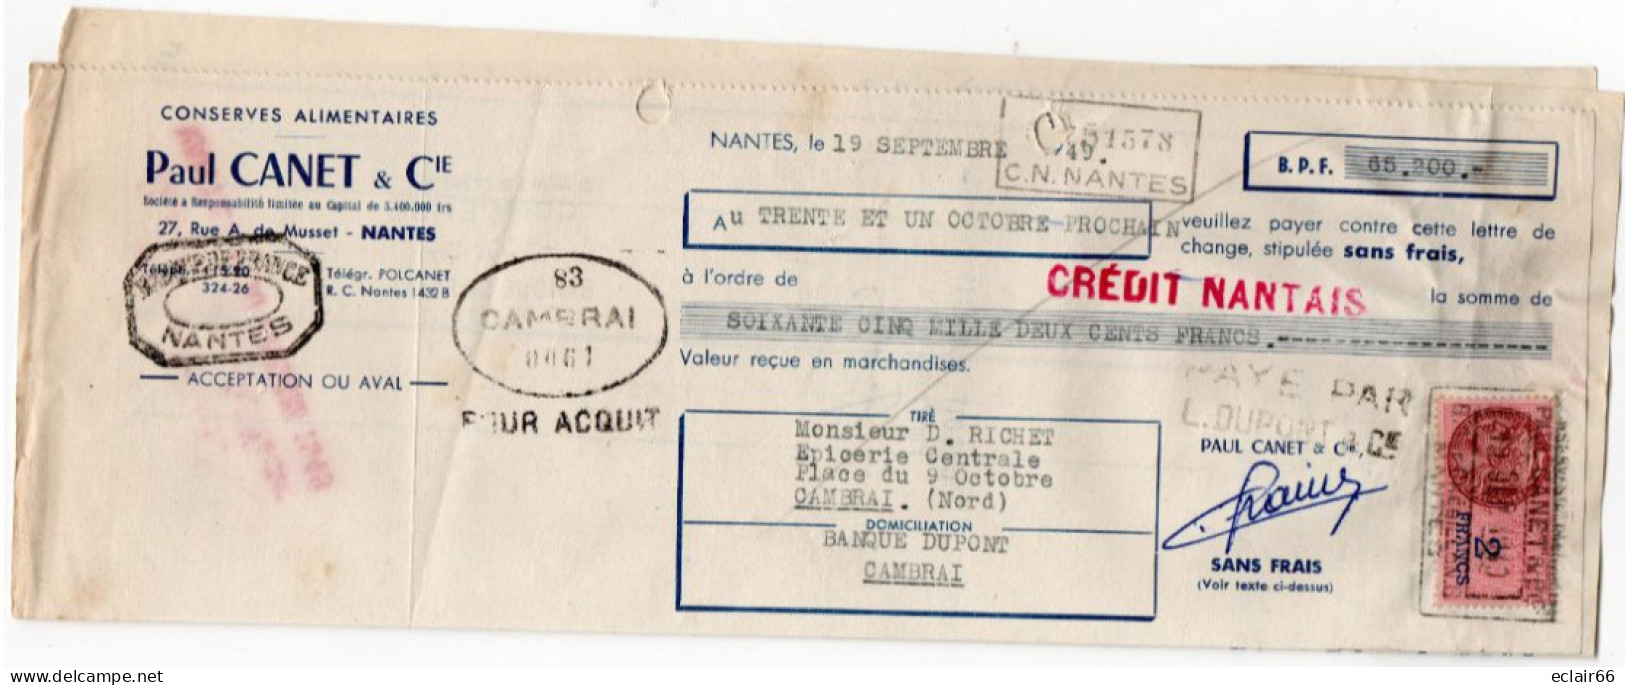 3 Documents Factures NANTES 1949 Conserves Alimentaires PAUL CANET Conserverie COQUILLES ST JACQUES - Food